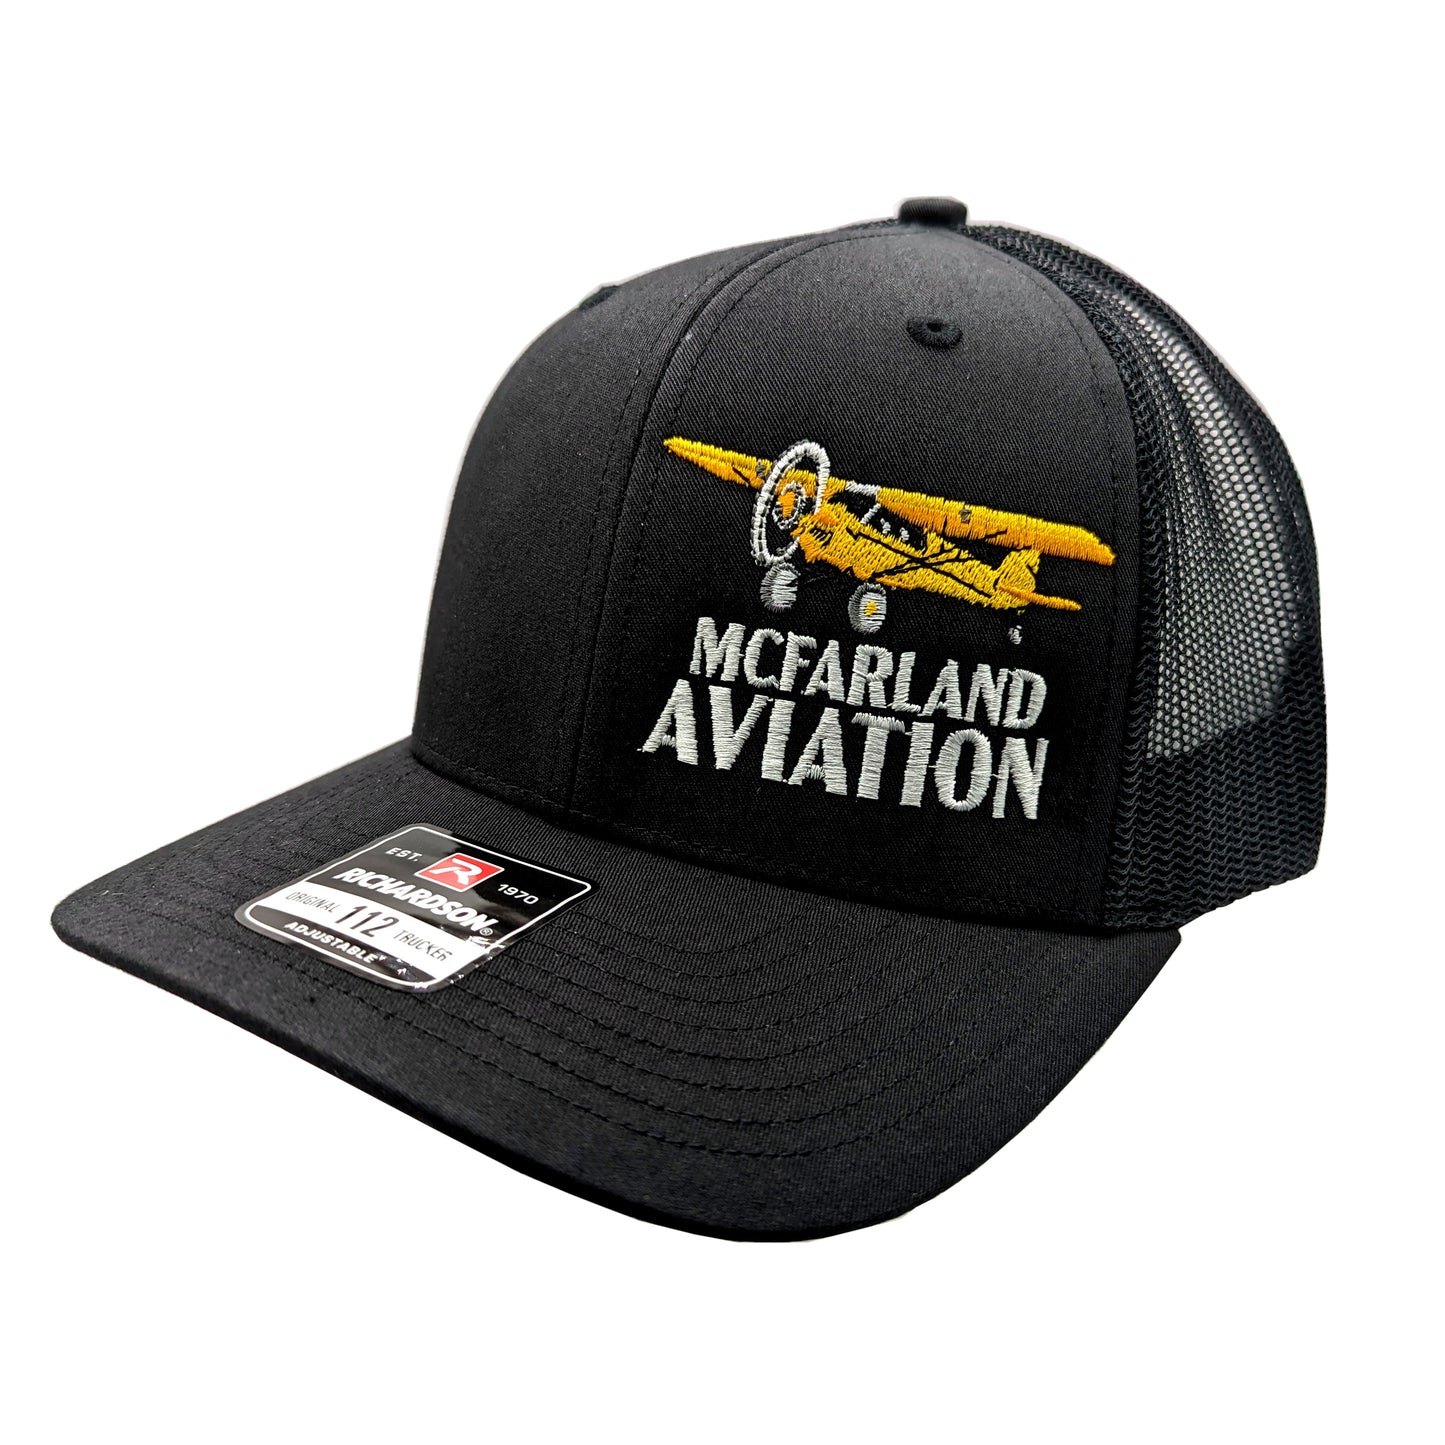 McFarland Aviation SnapBack Hat